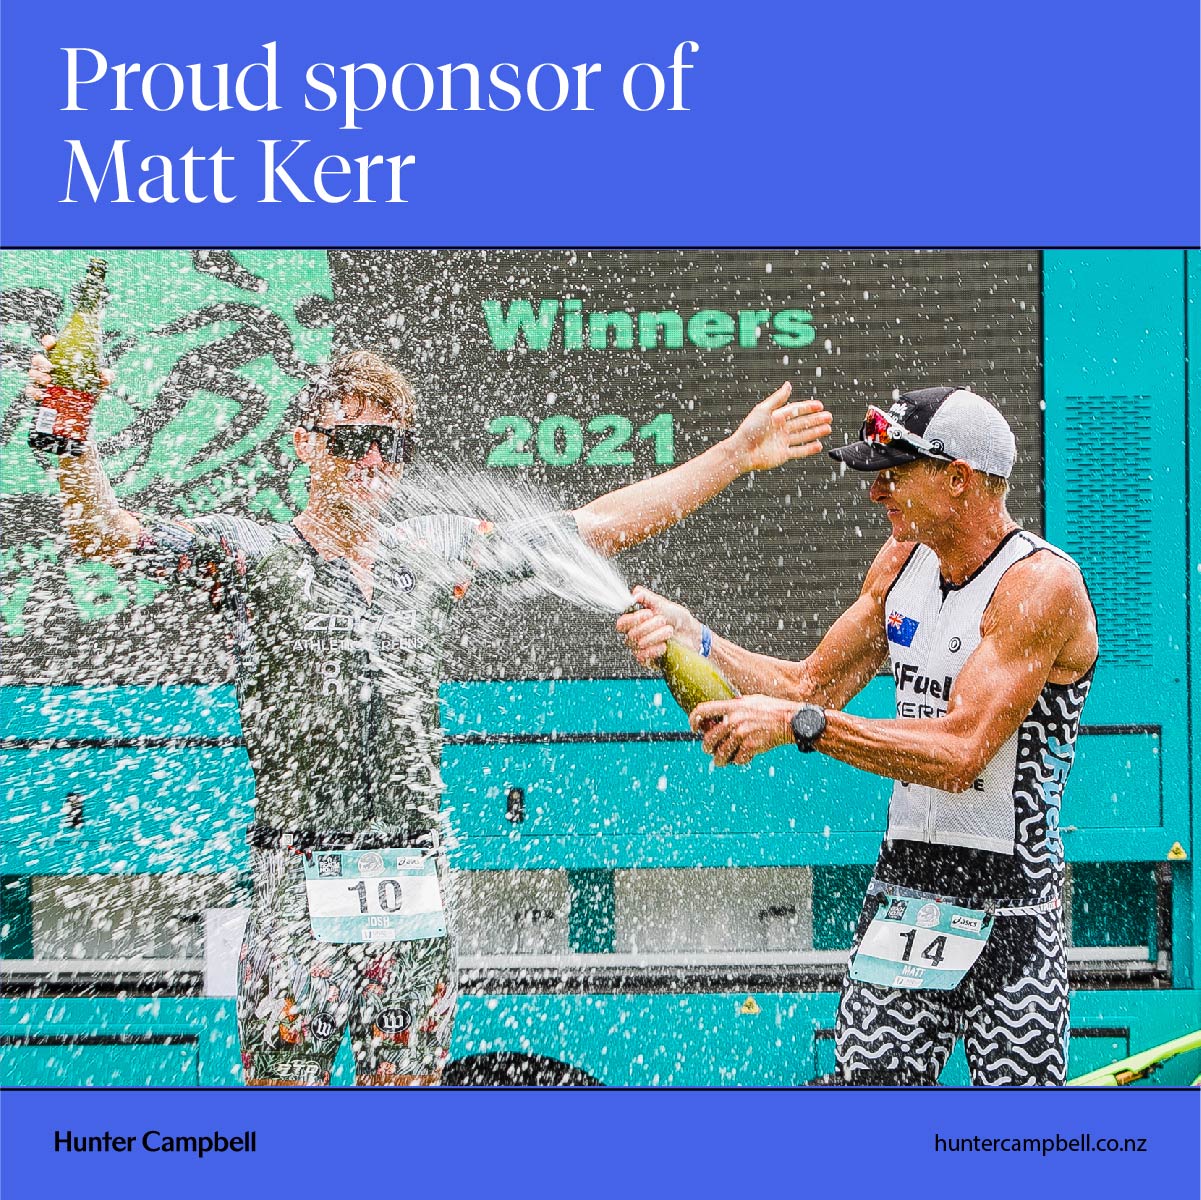 Another Podium Finish for Matt Kerr